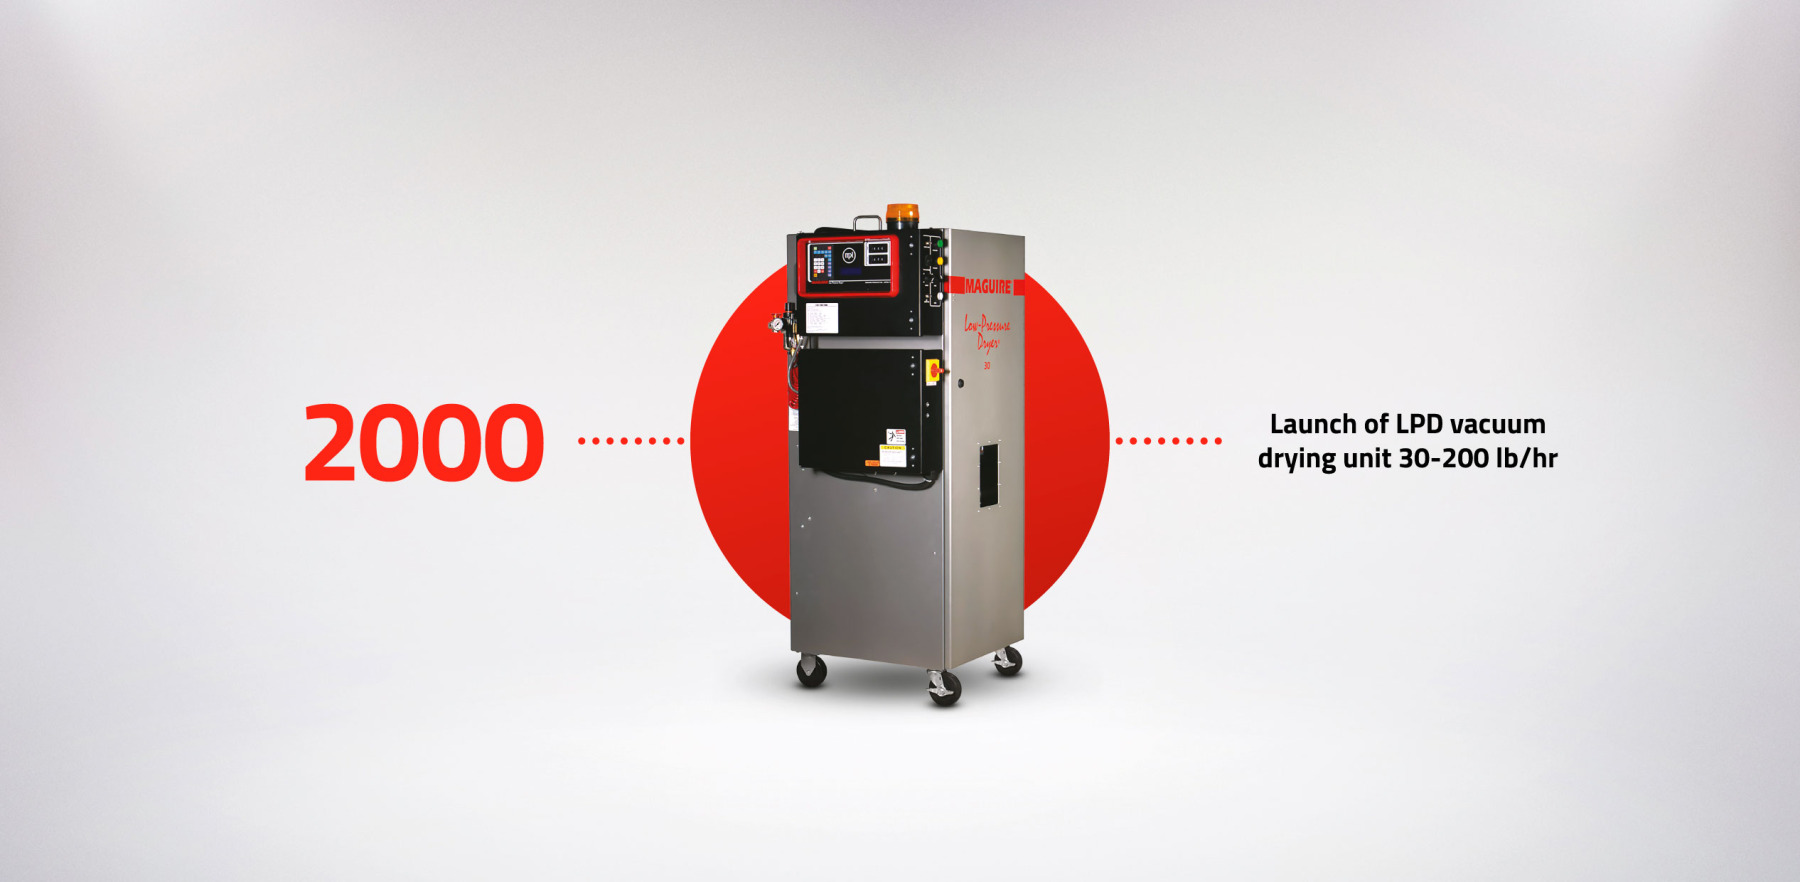 Launch of LPD vacuum drying unit 30-200 lb/hr